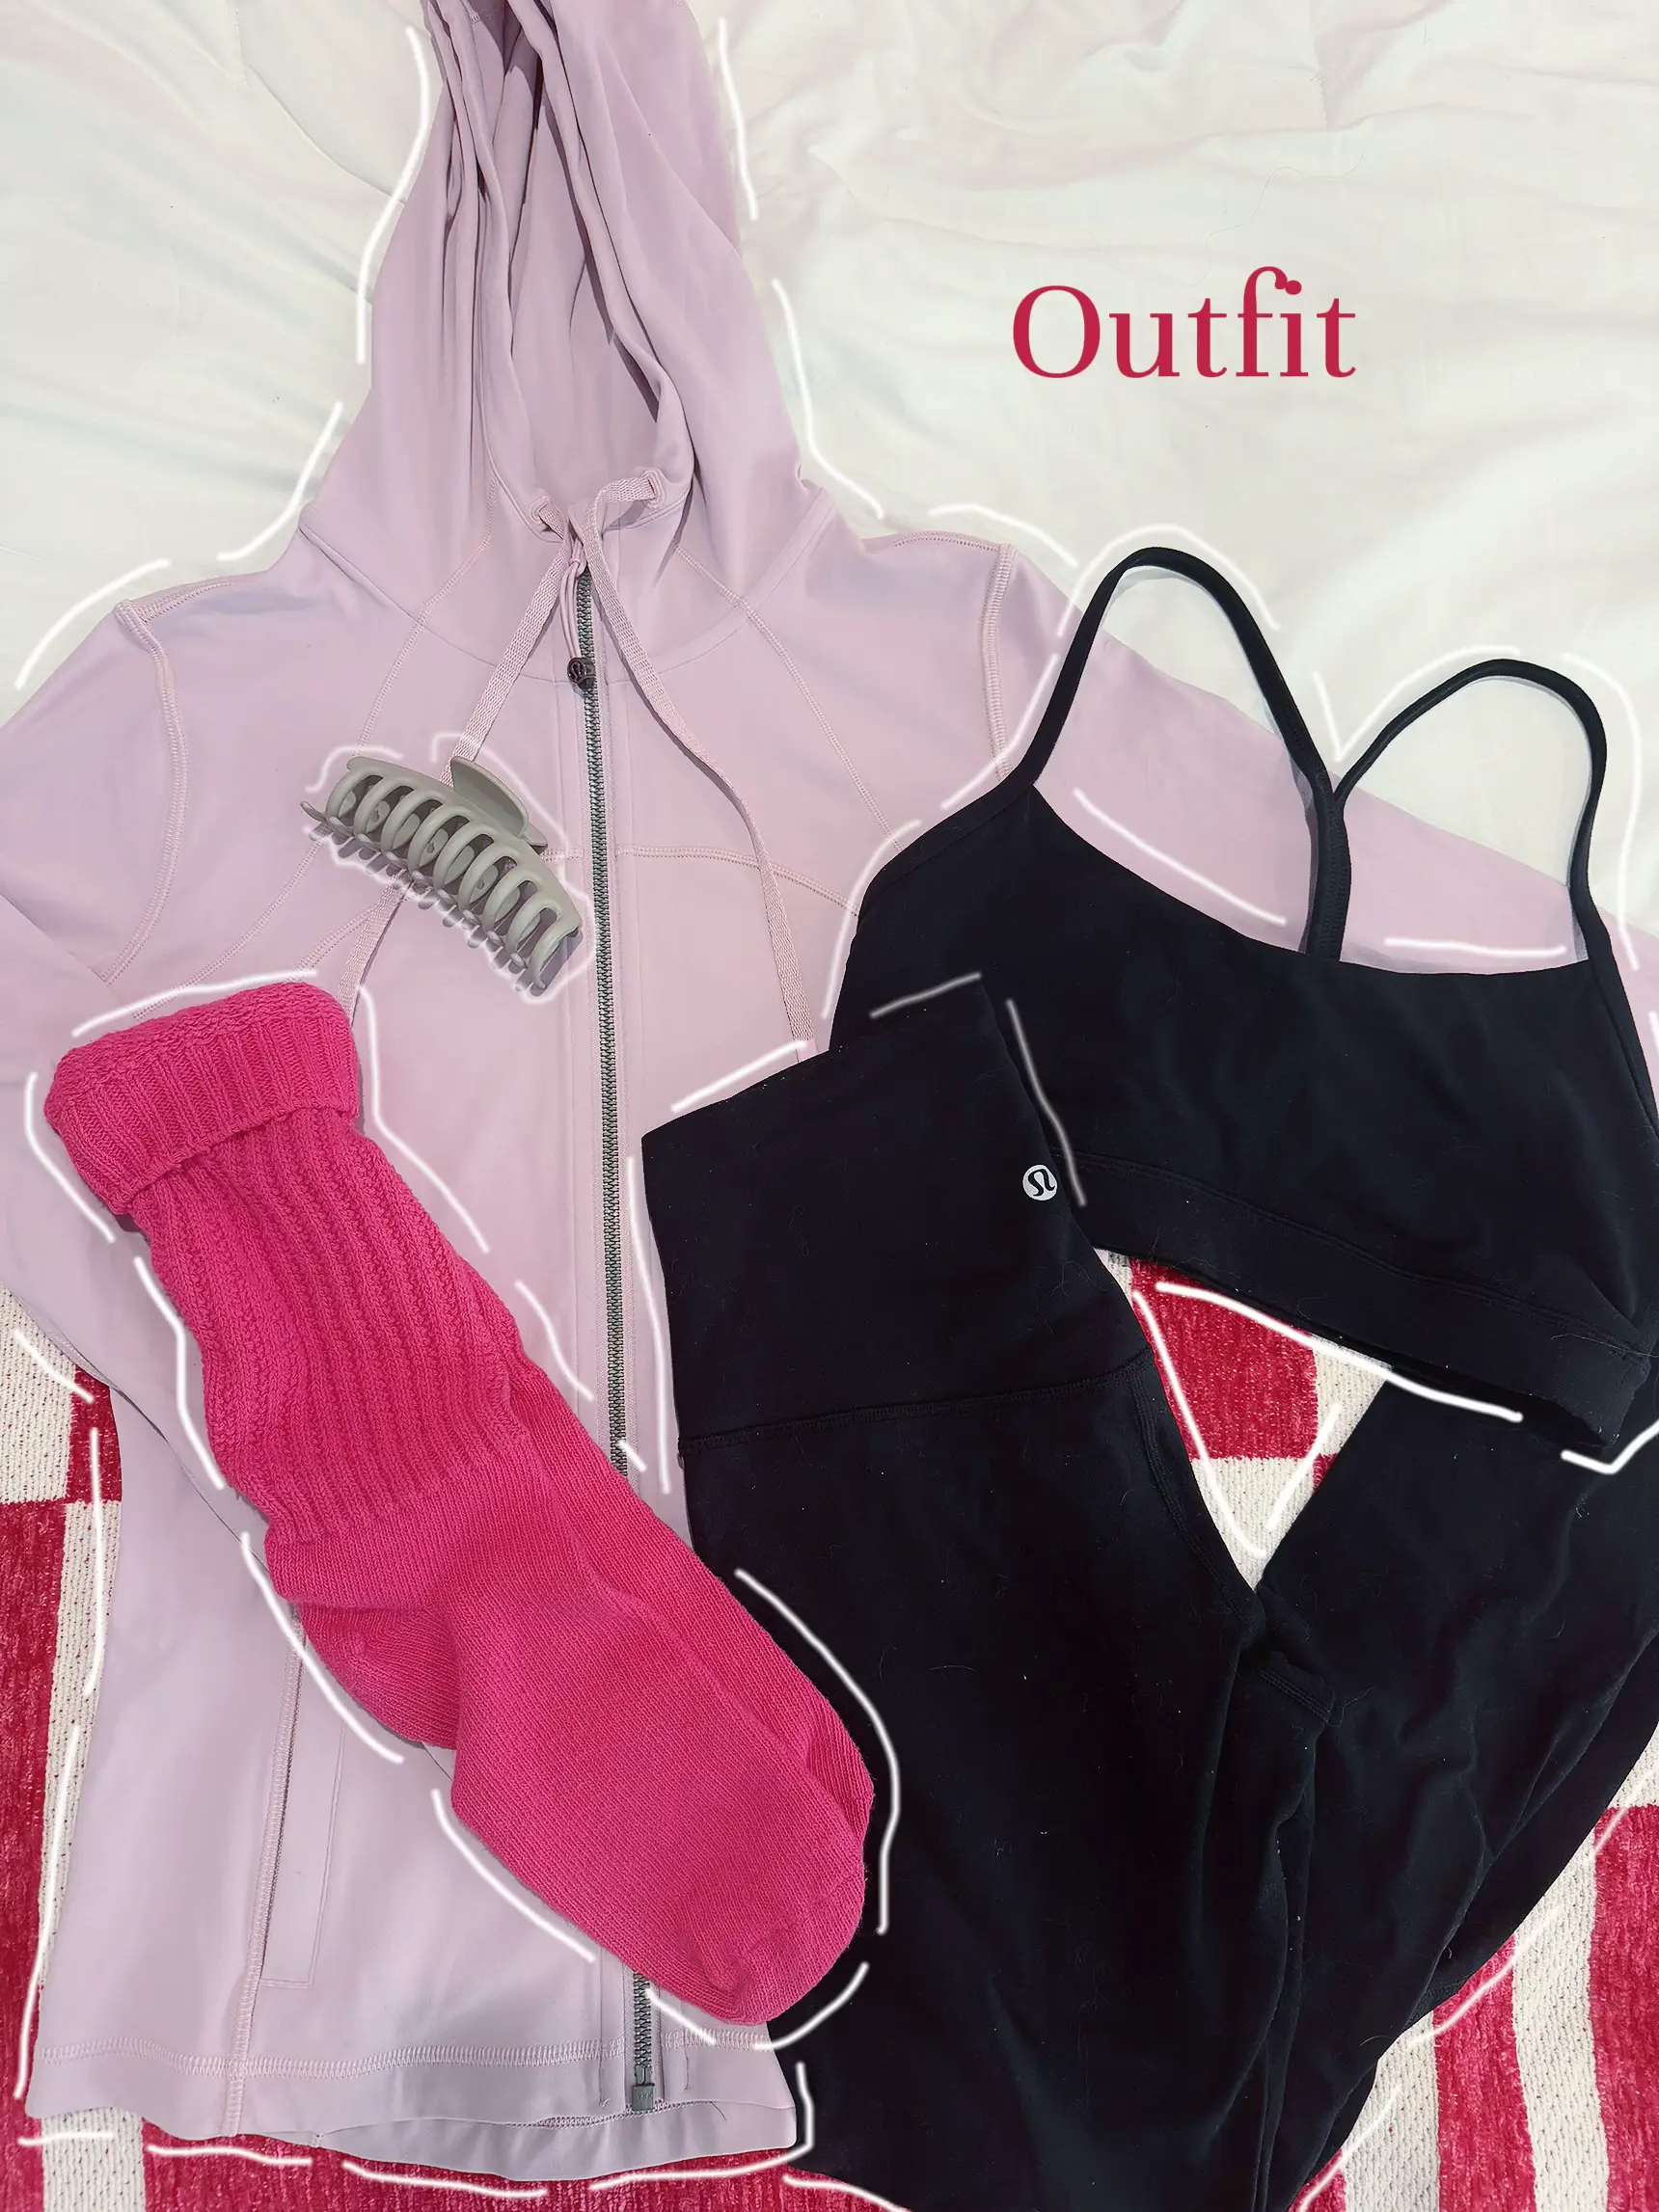 Lululemon Hot Pink Leggings Size 2 - $45 (50% Off Retail) - From Kaylee